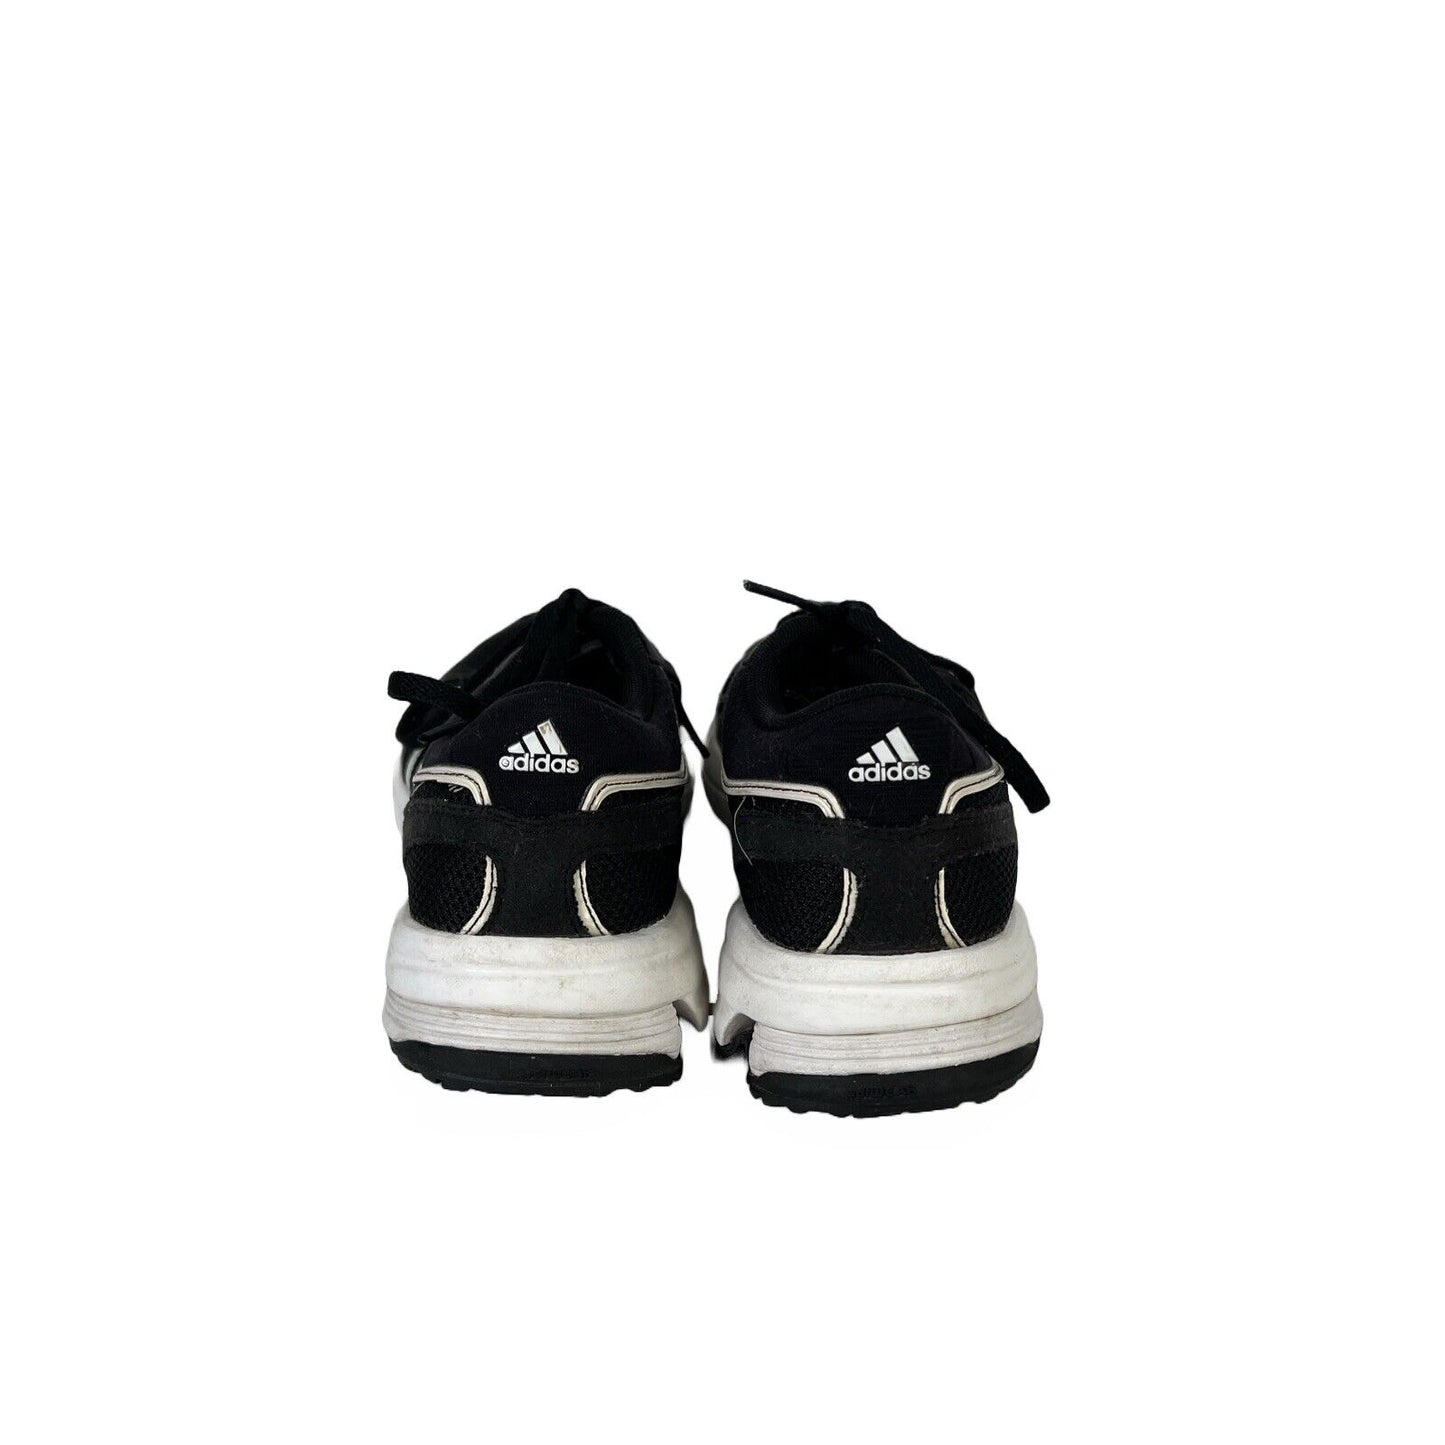 adidas Women's Black Marathon 10 Lace Up Athletic Shoes - 7.5